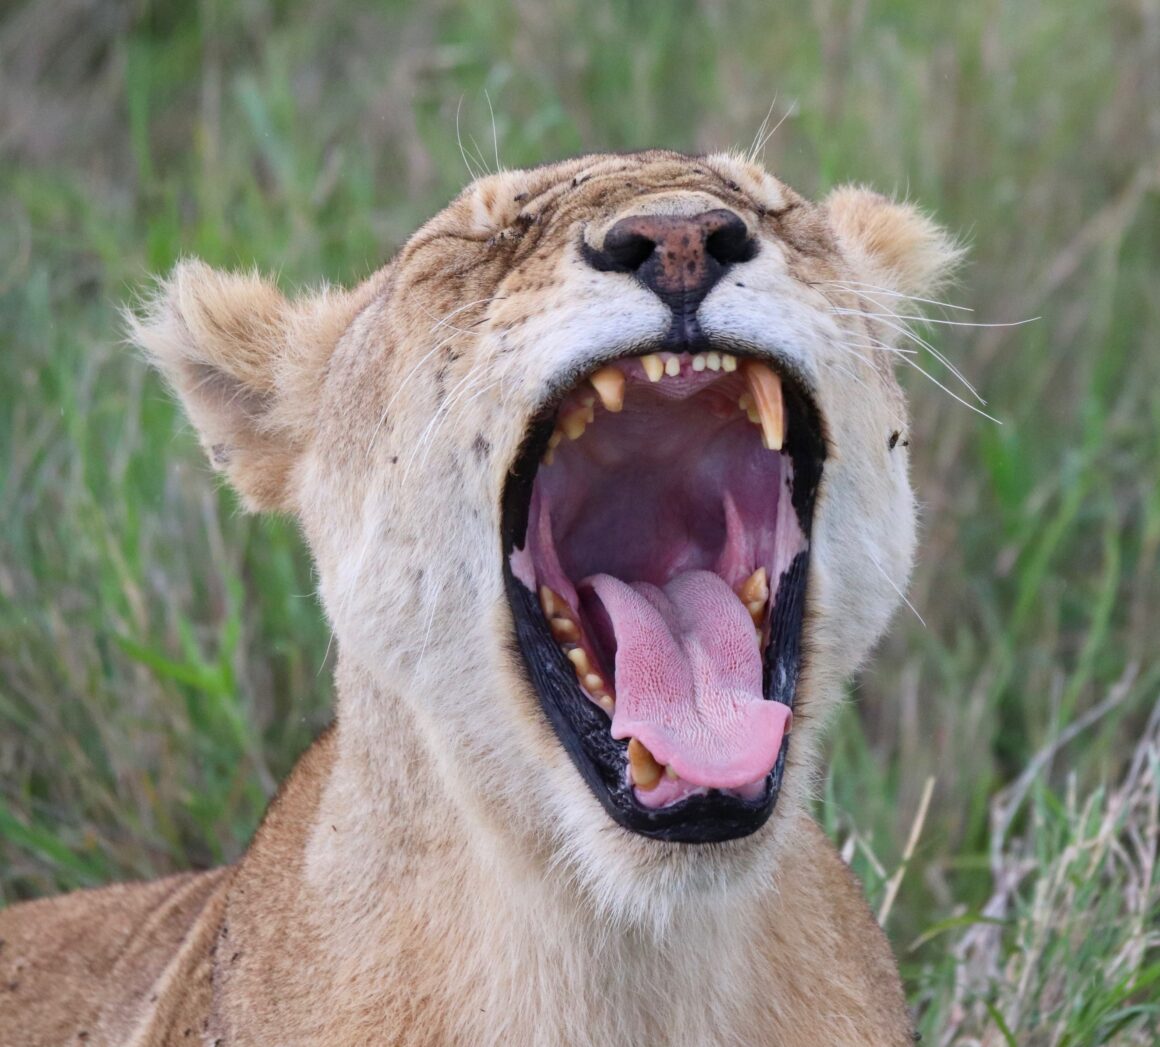 Lion yawning in Serengeti National Park